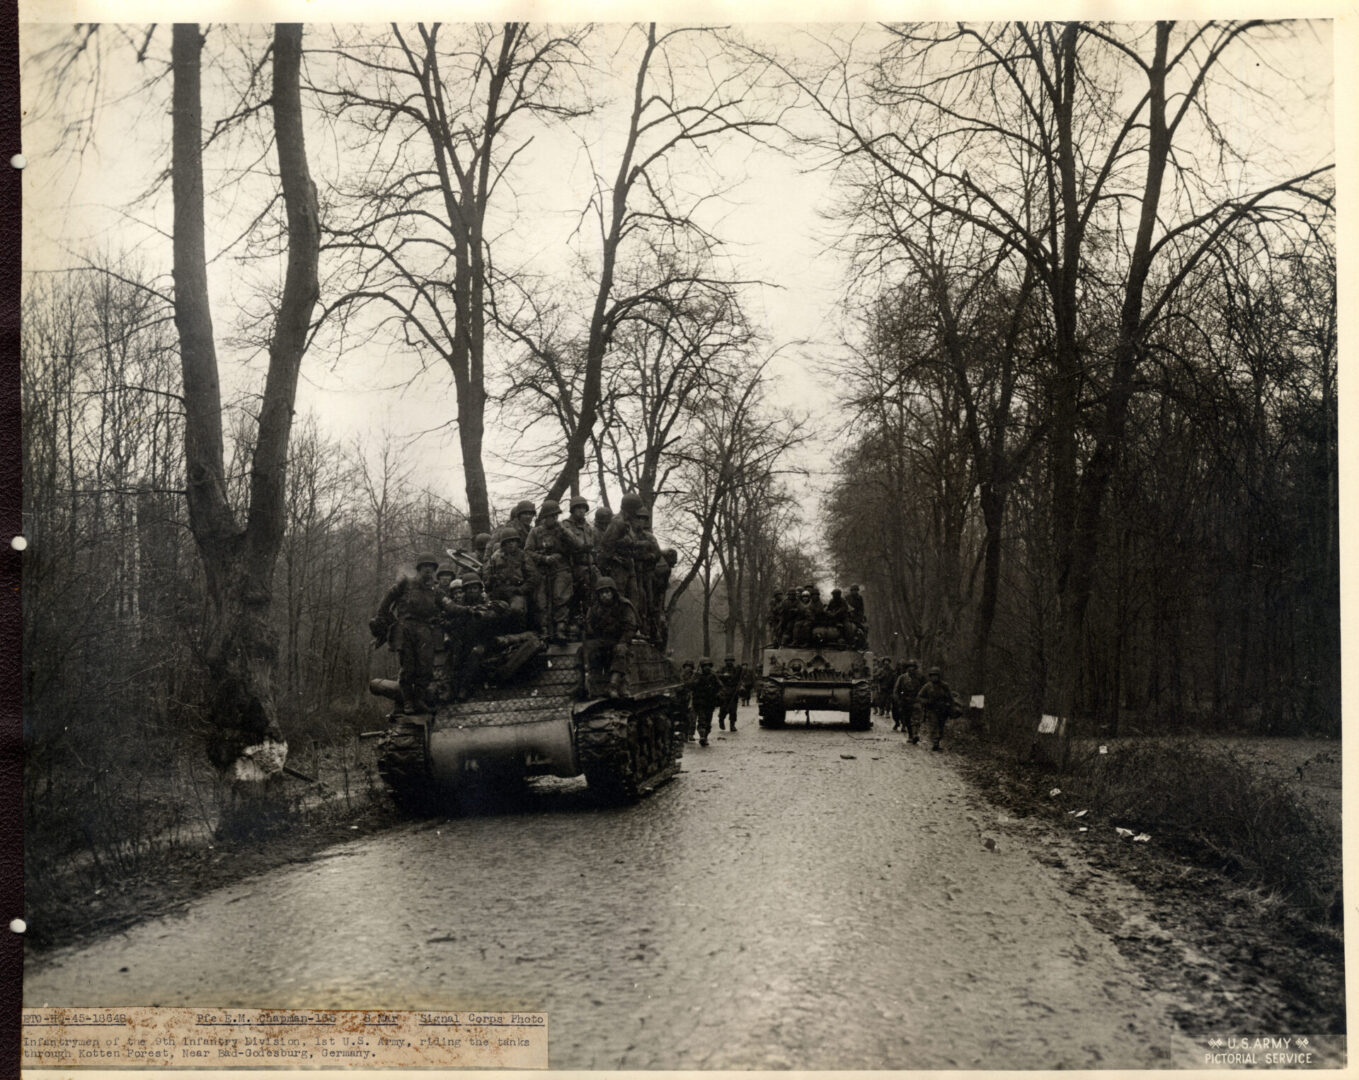 Infantrymen riding their tanks through Kotten Forest